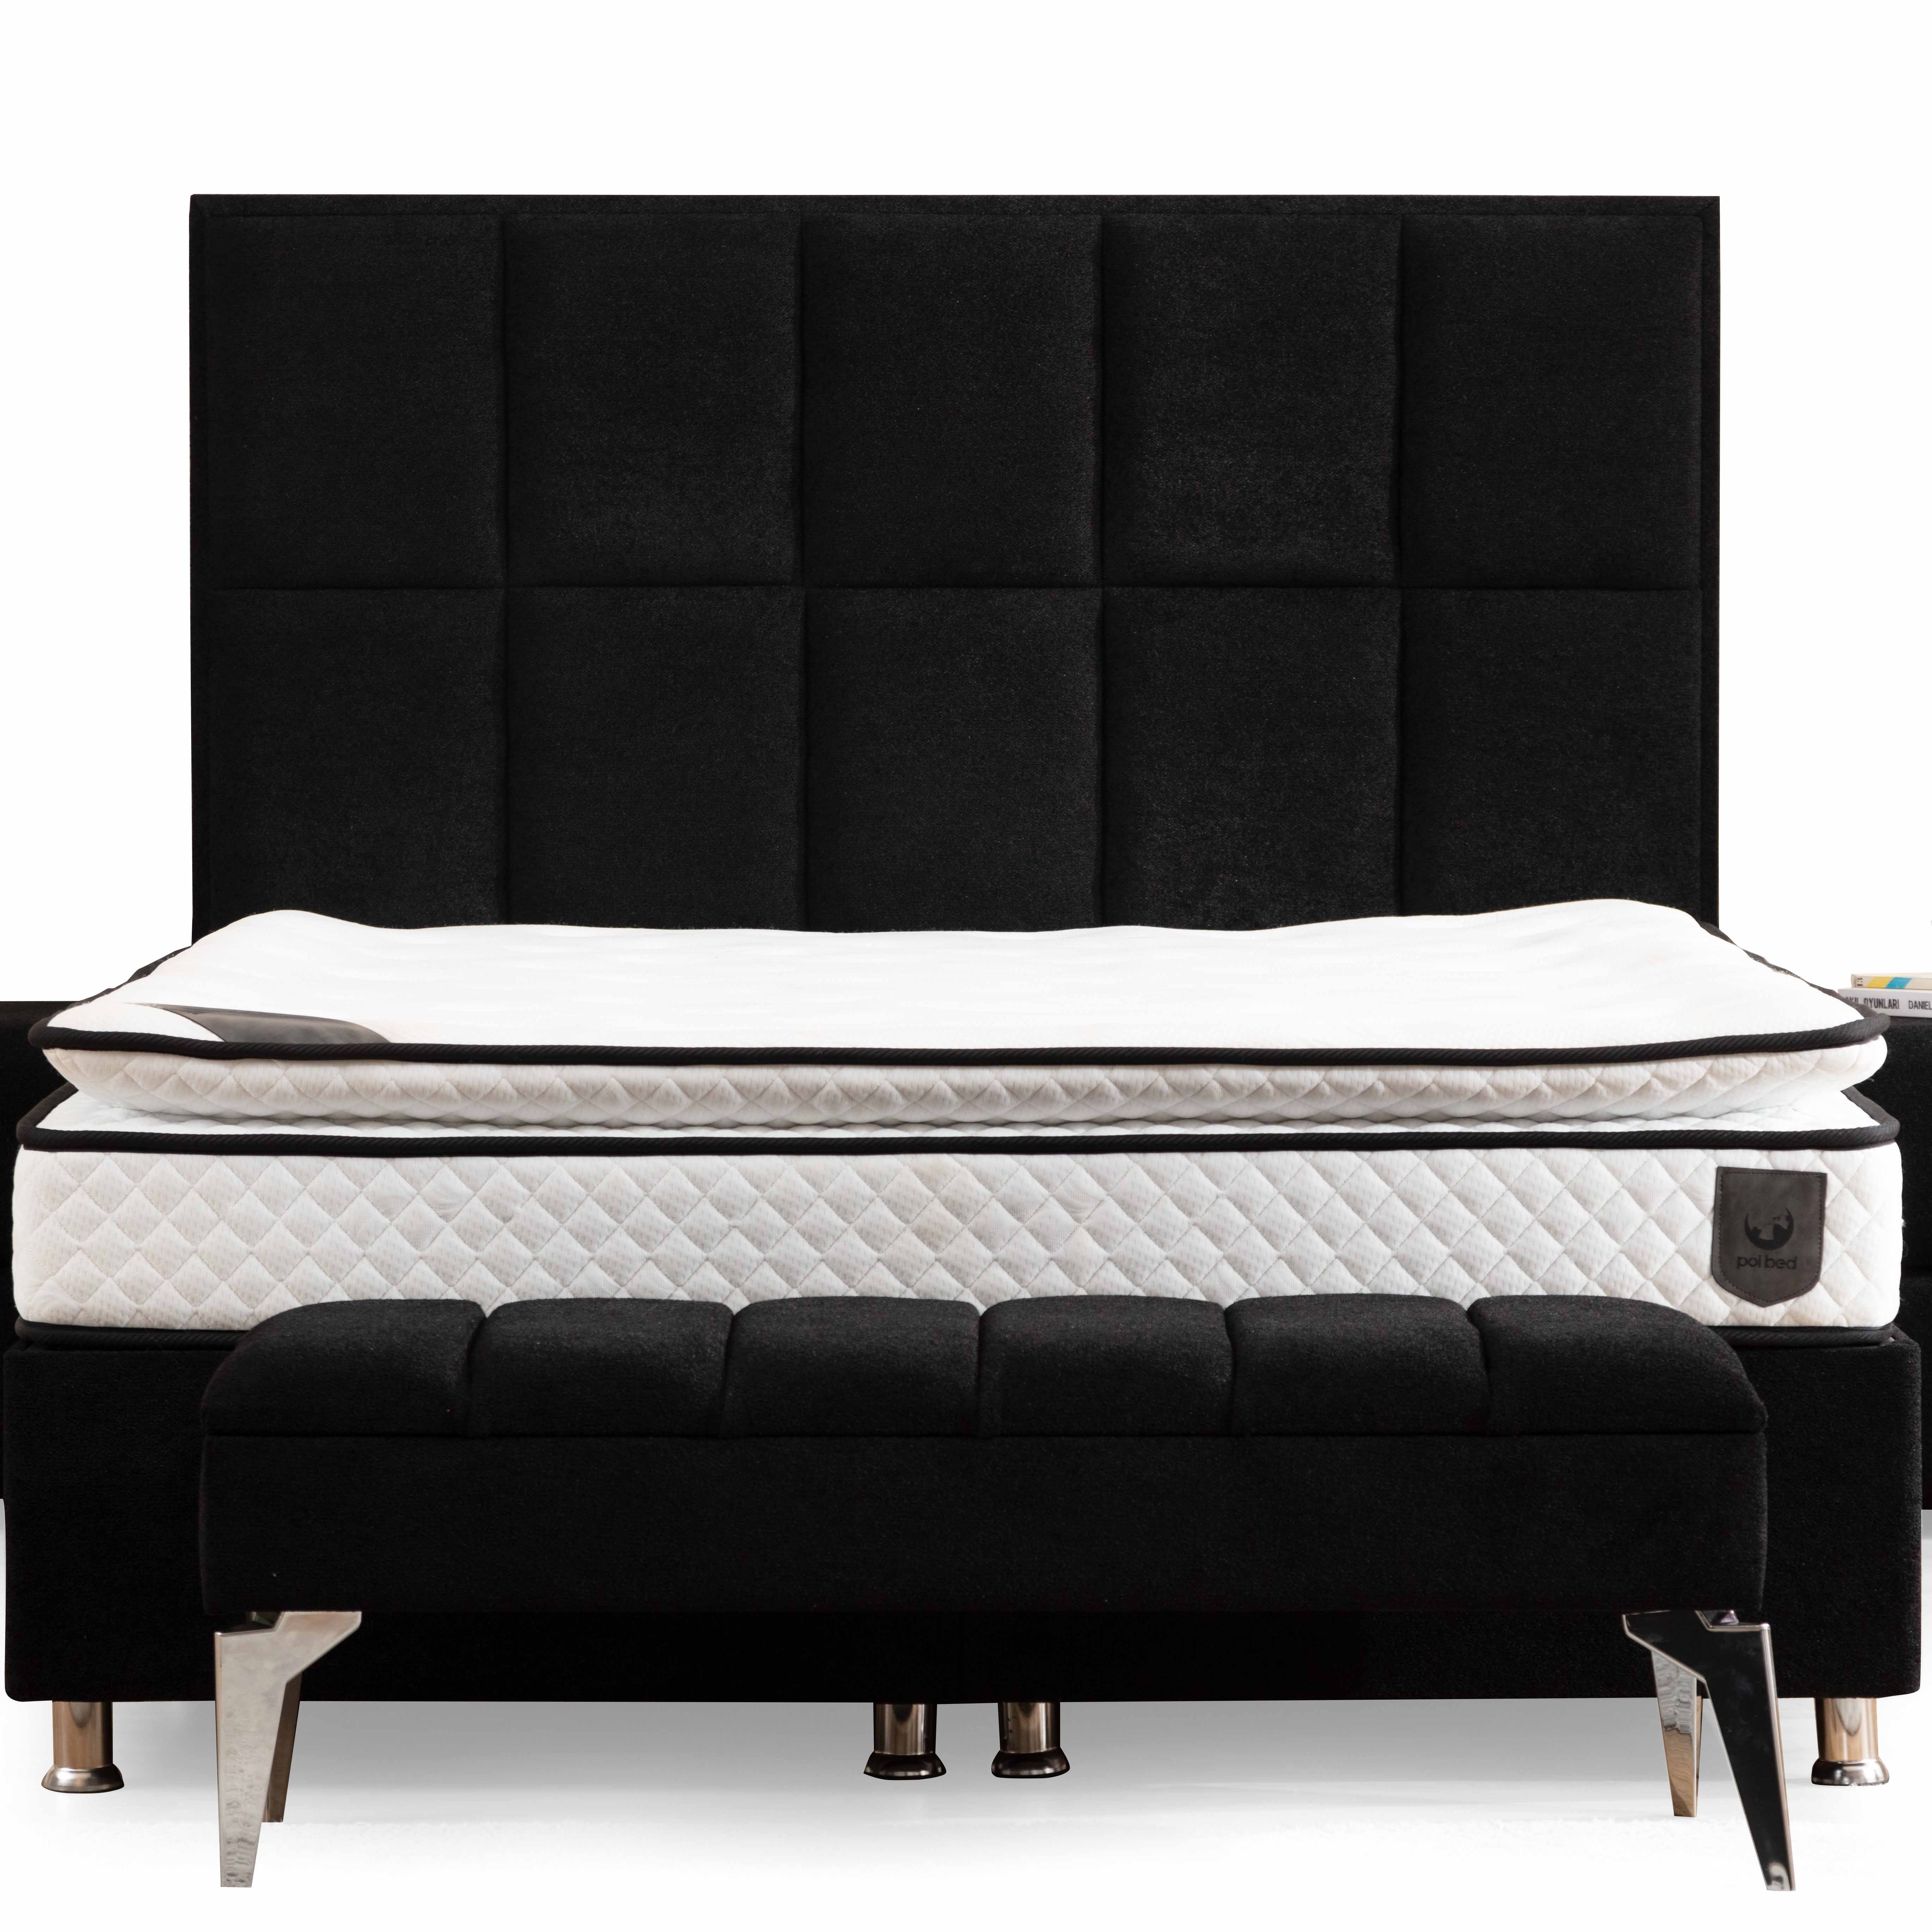 Lovita Bedroom (Bed With Storage 90x190cm)